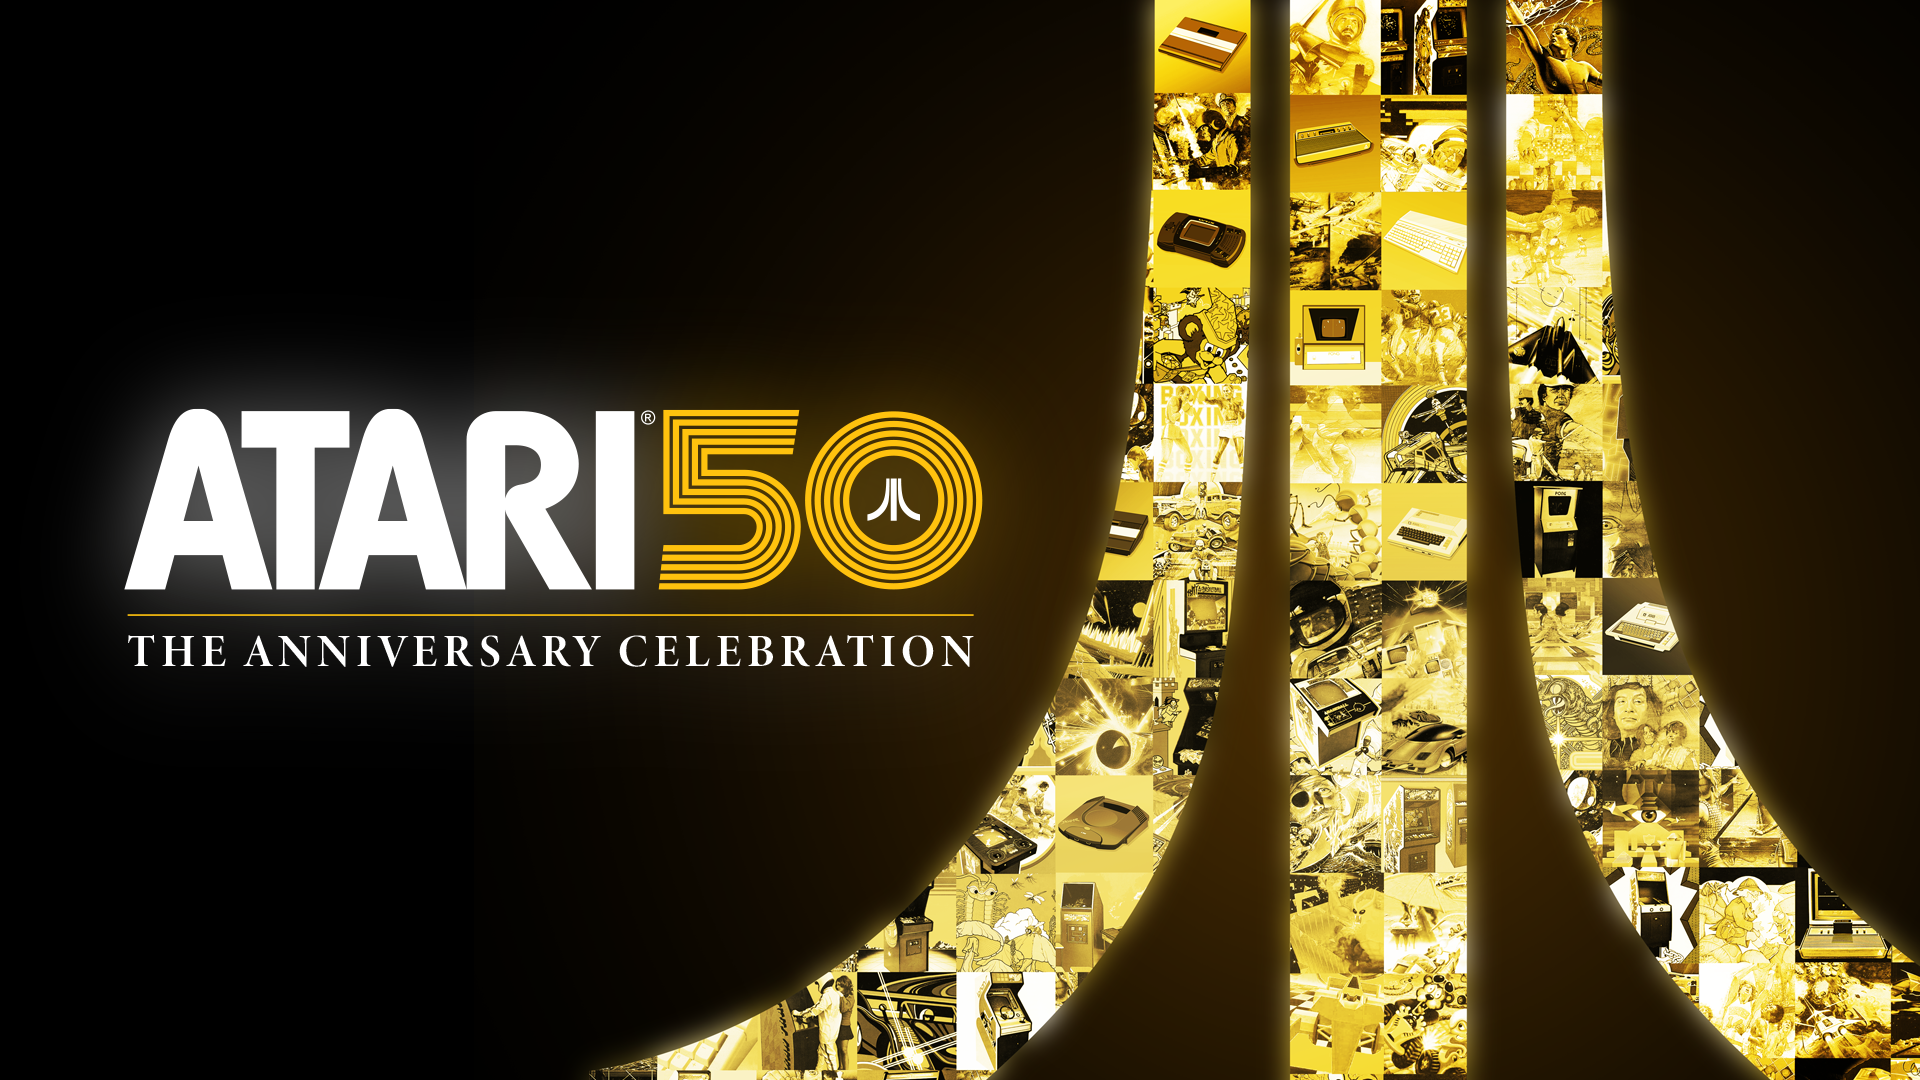 Atari 50: The Anniversary Celebration Review